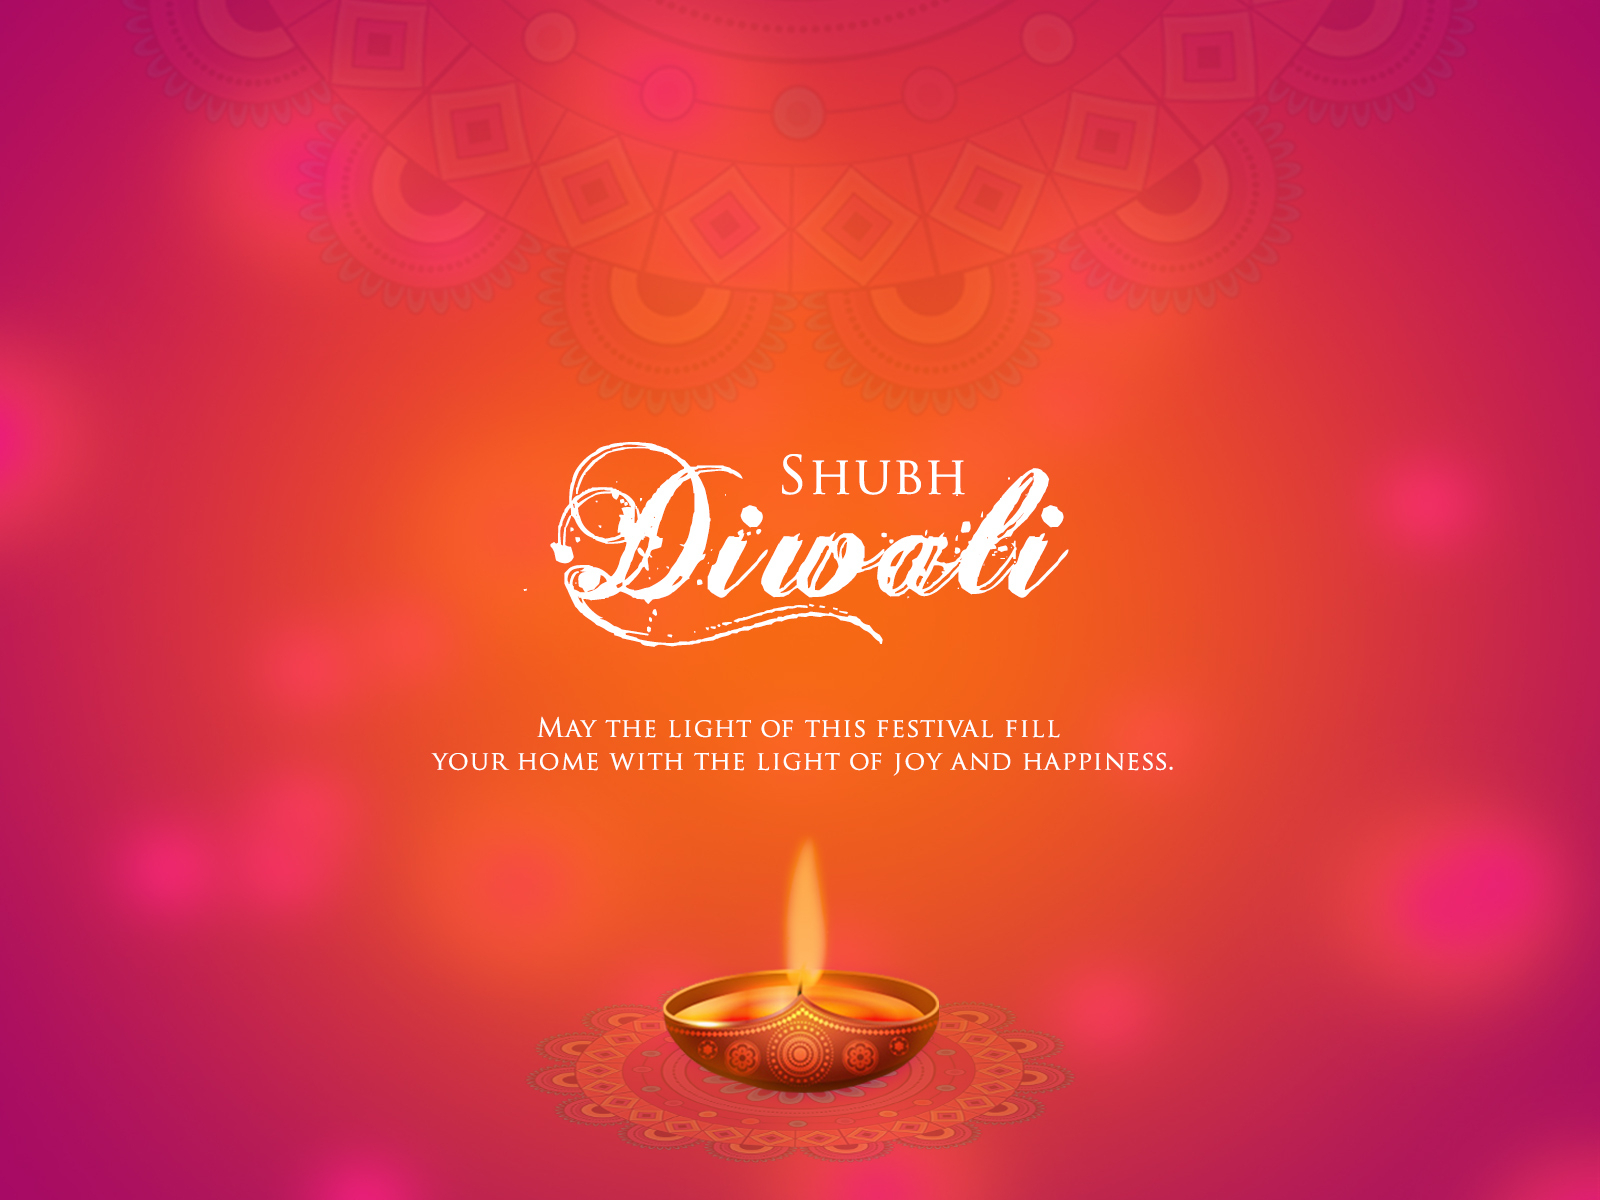 Printable Diwali Greeting Cards